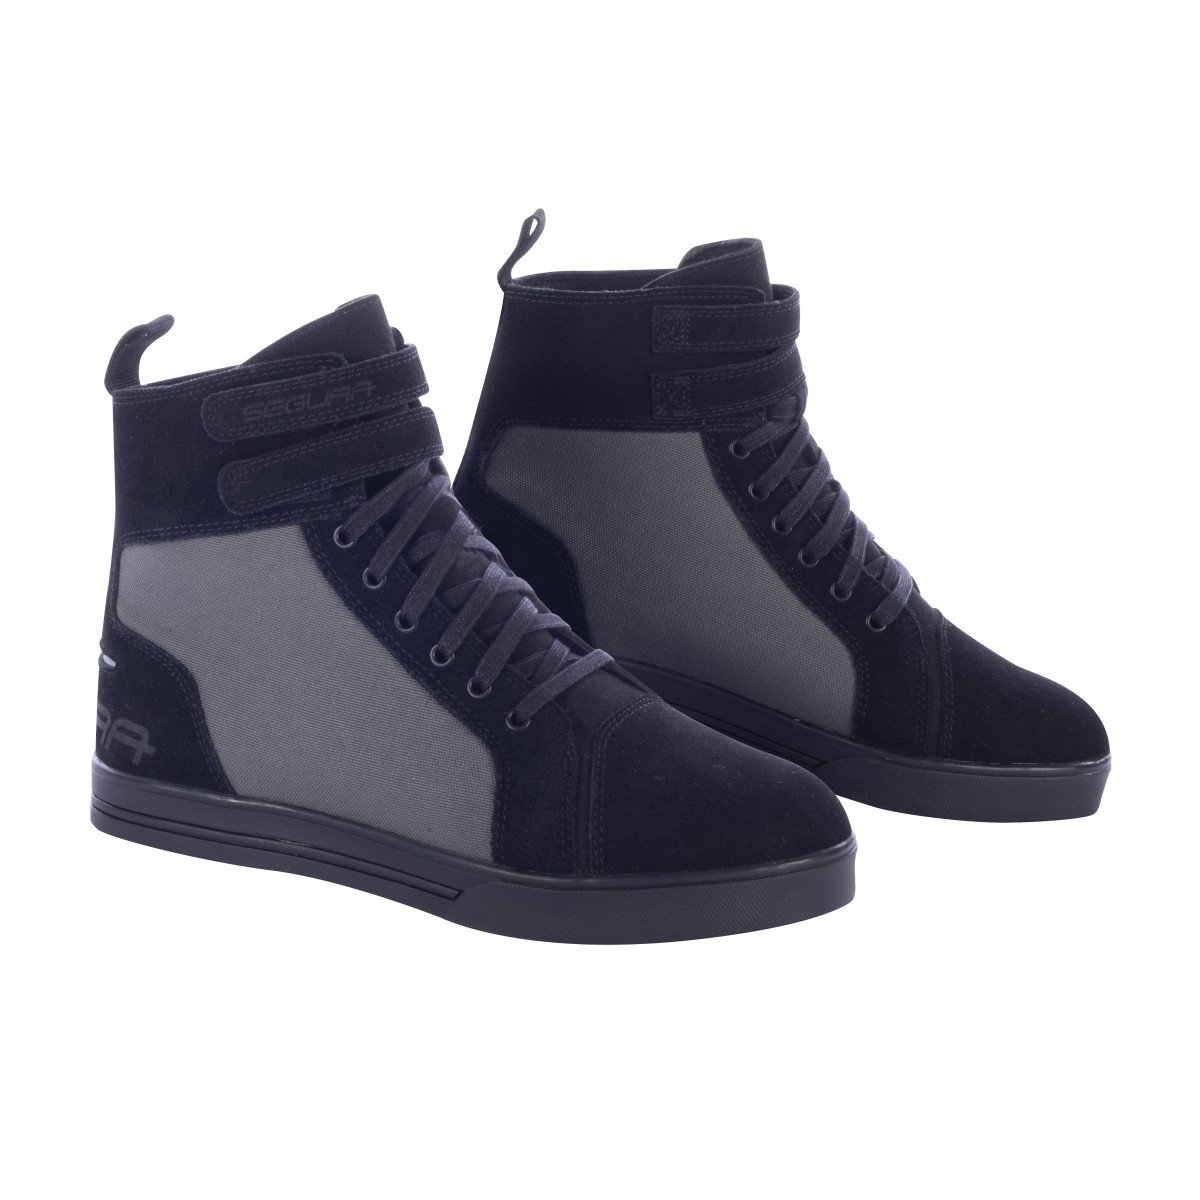 Image of Segura Sneakers Contact Black Grey Size 46 ID 3660815171592